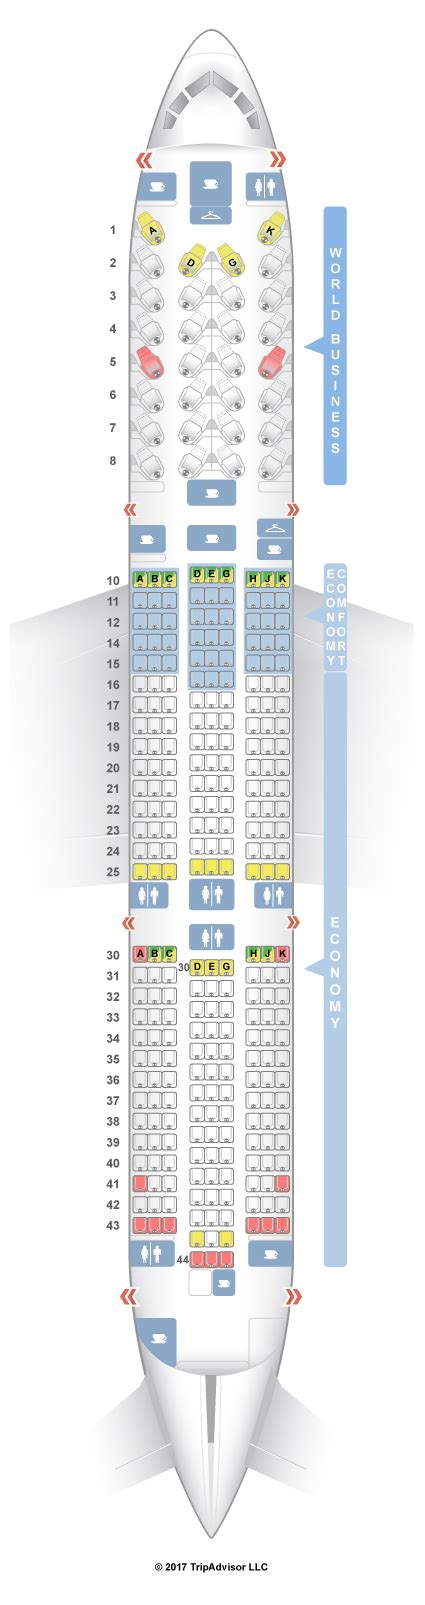 klm 787 900 seating chart